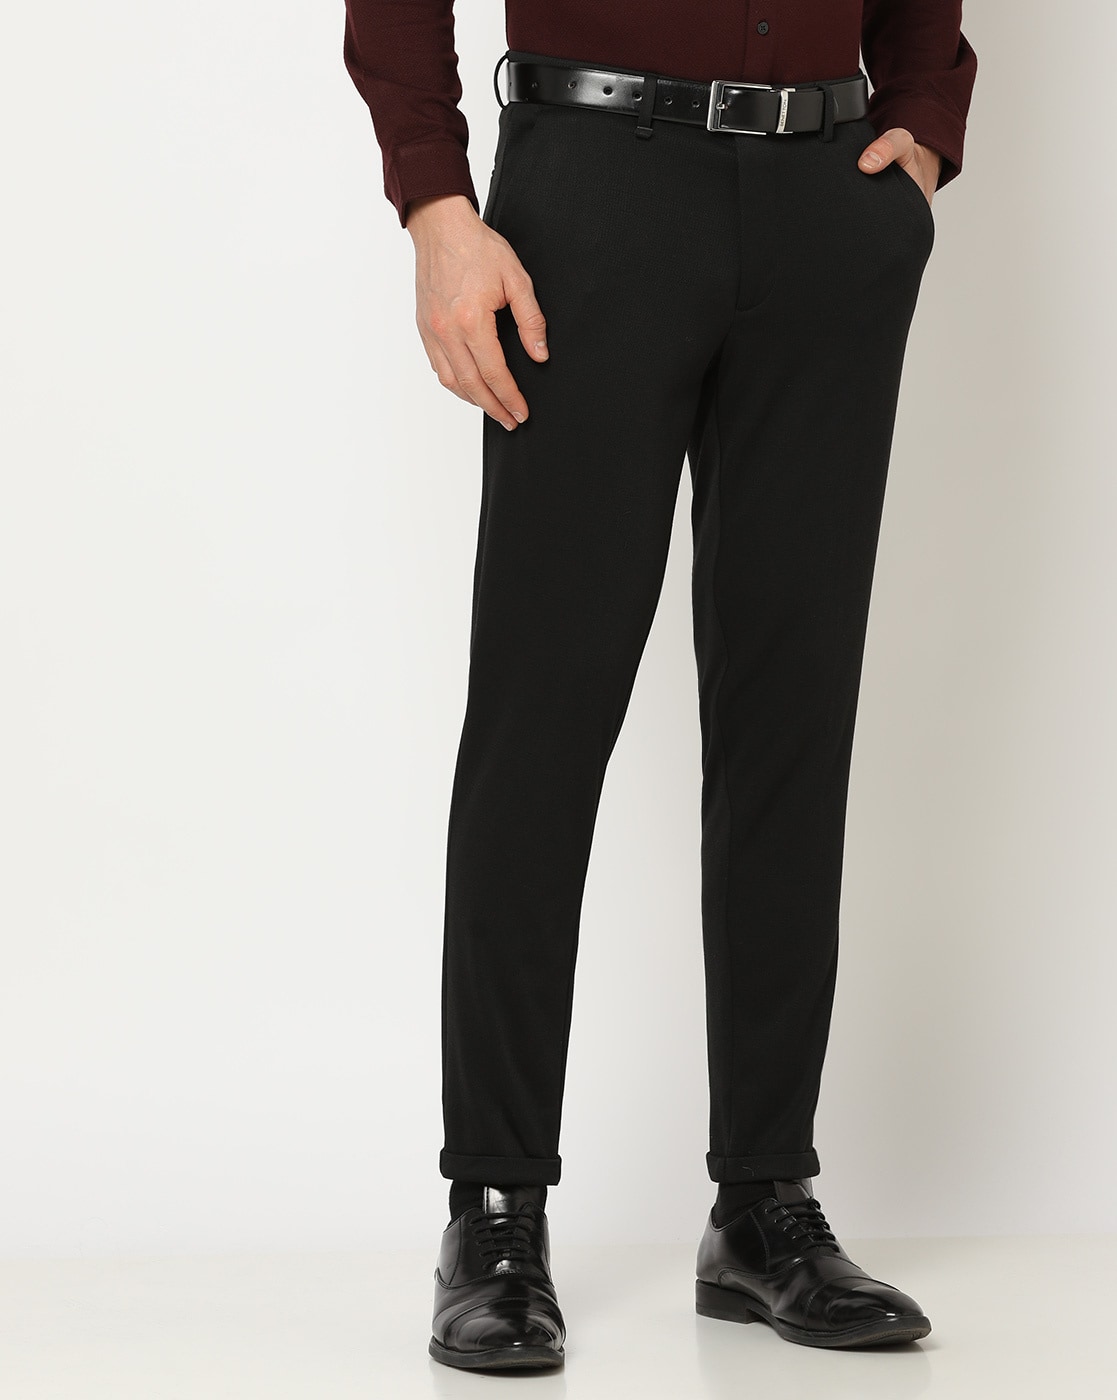 Cropped Business Pant for Men Slim Fit Ankle Length Flat Front Dress Pants  Expandable-Waist Suit Trousers (Black,29) : Amazon.ca: Clothing, Shoes &  Accessories